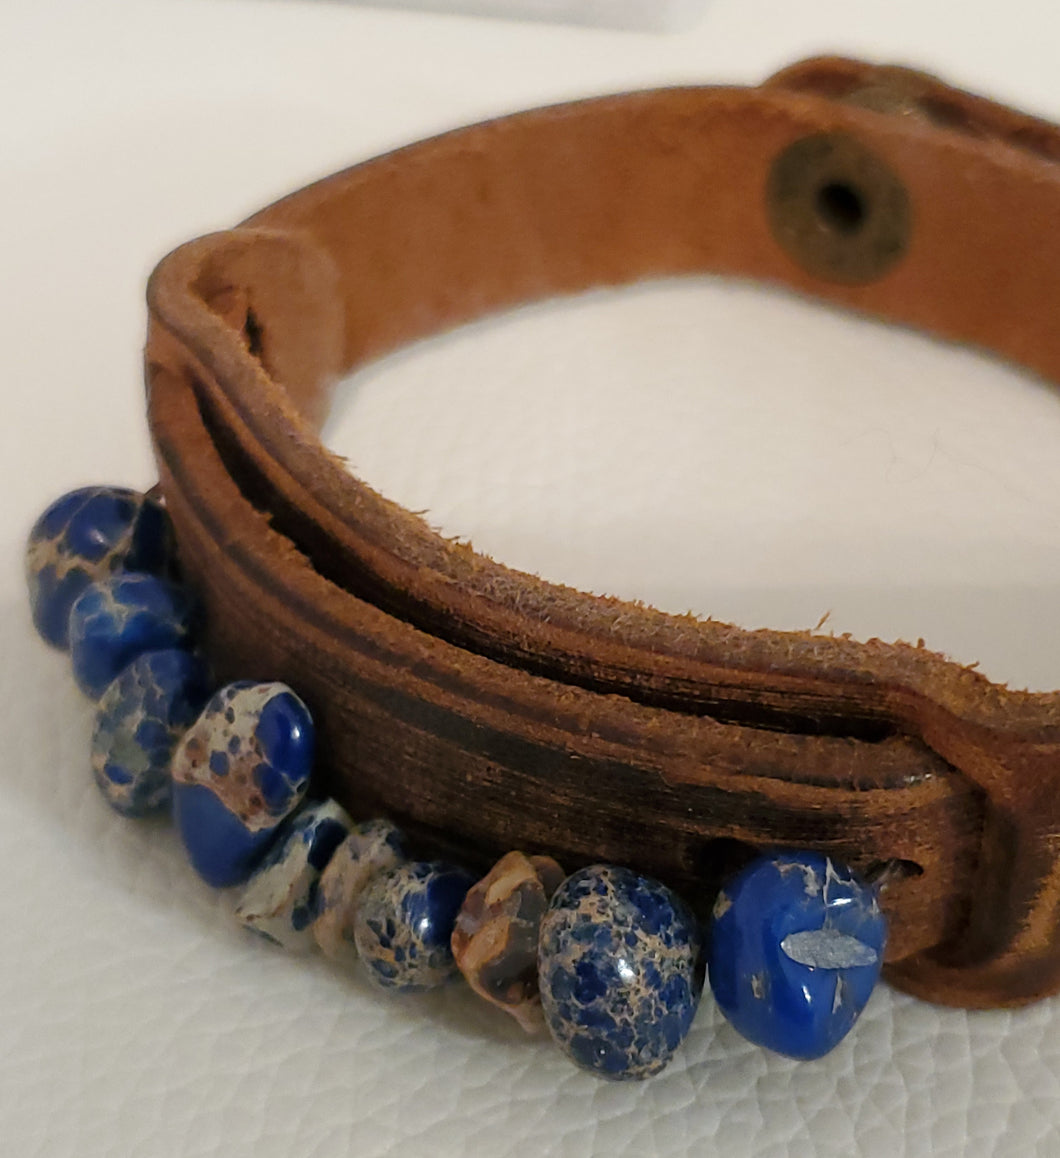 Bracelet-Leather Strap with Blue  Regalite Stones